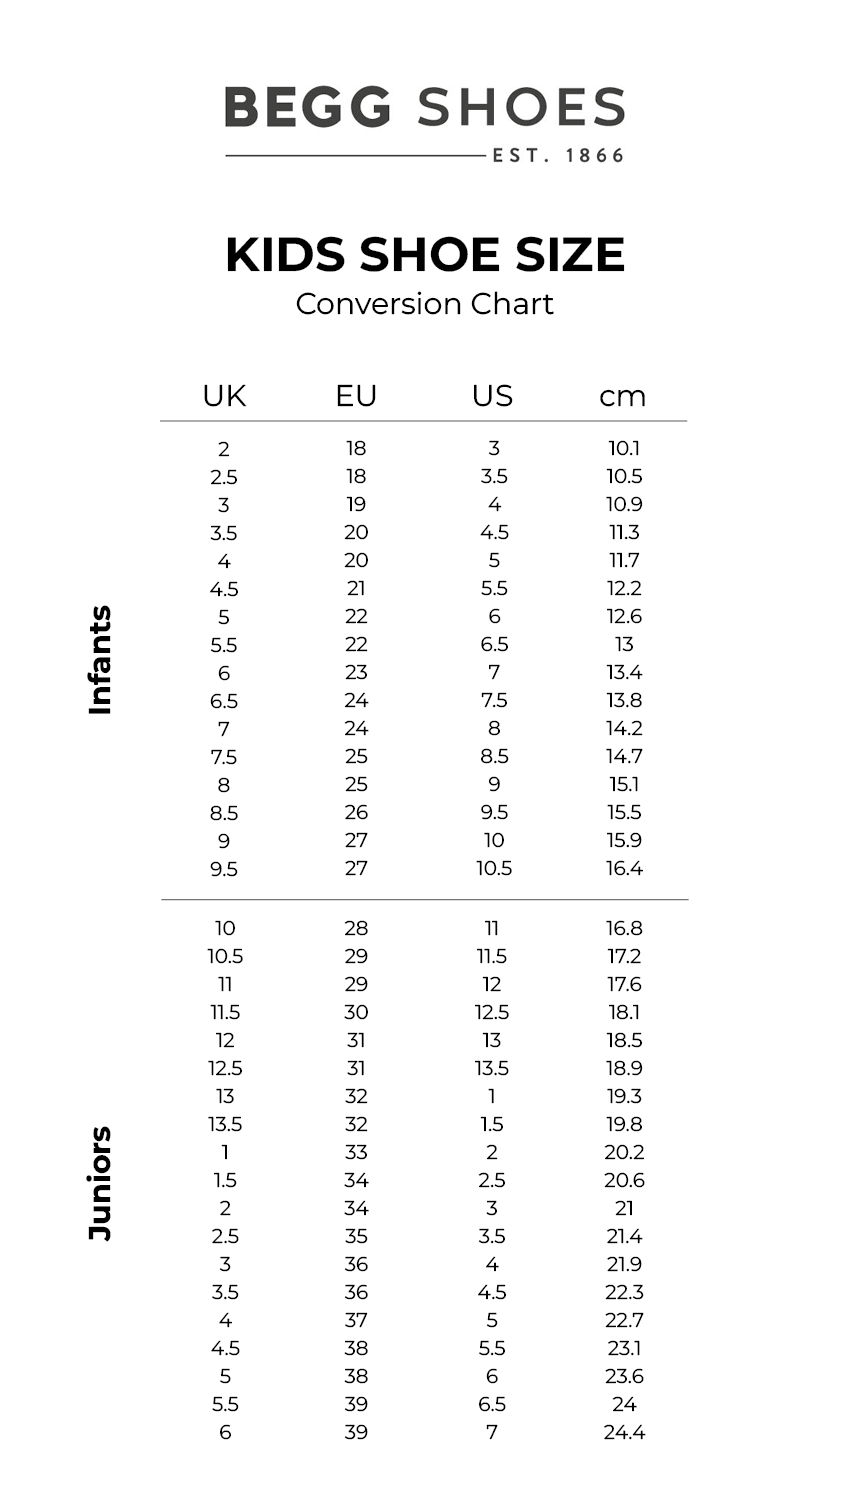 Kids Shoe Size Chart - Convert UK, EU, US & CM